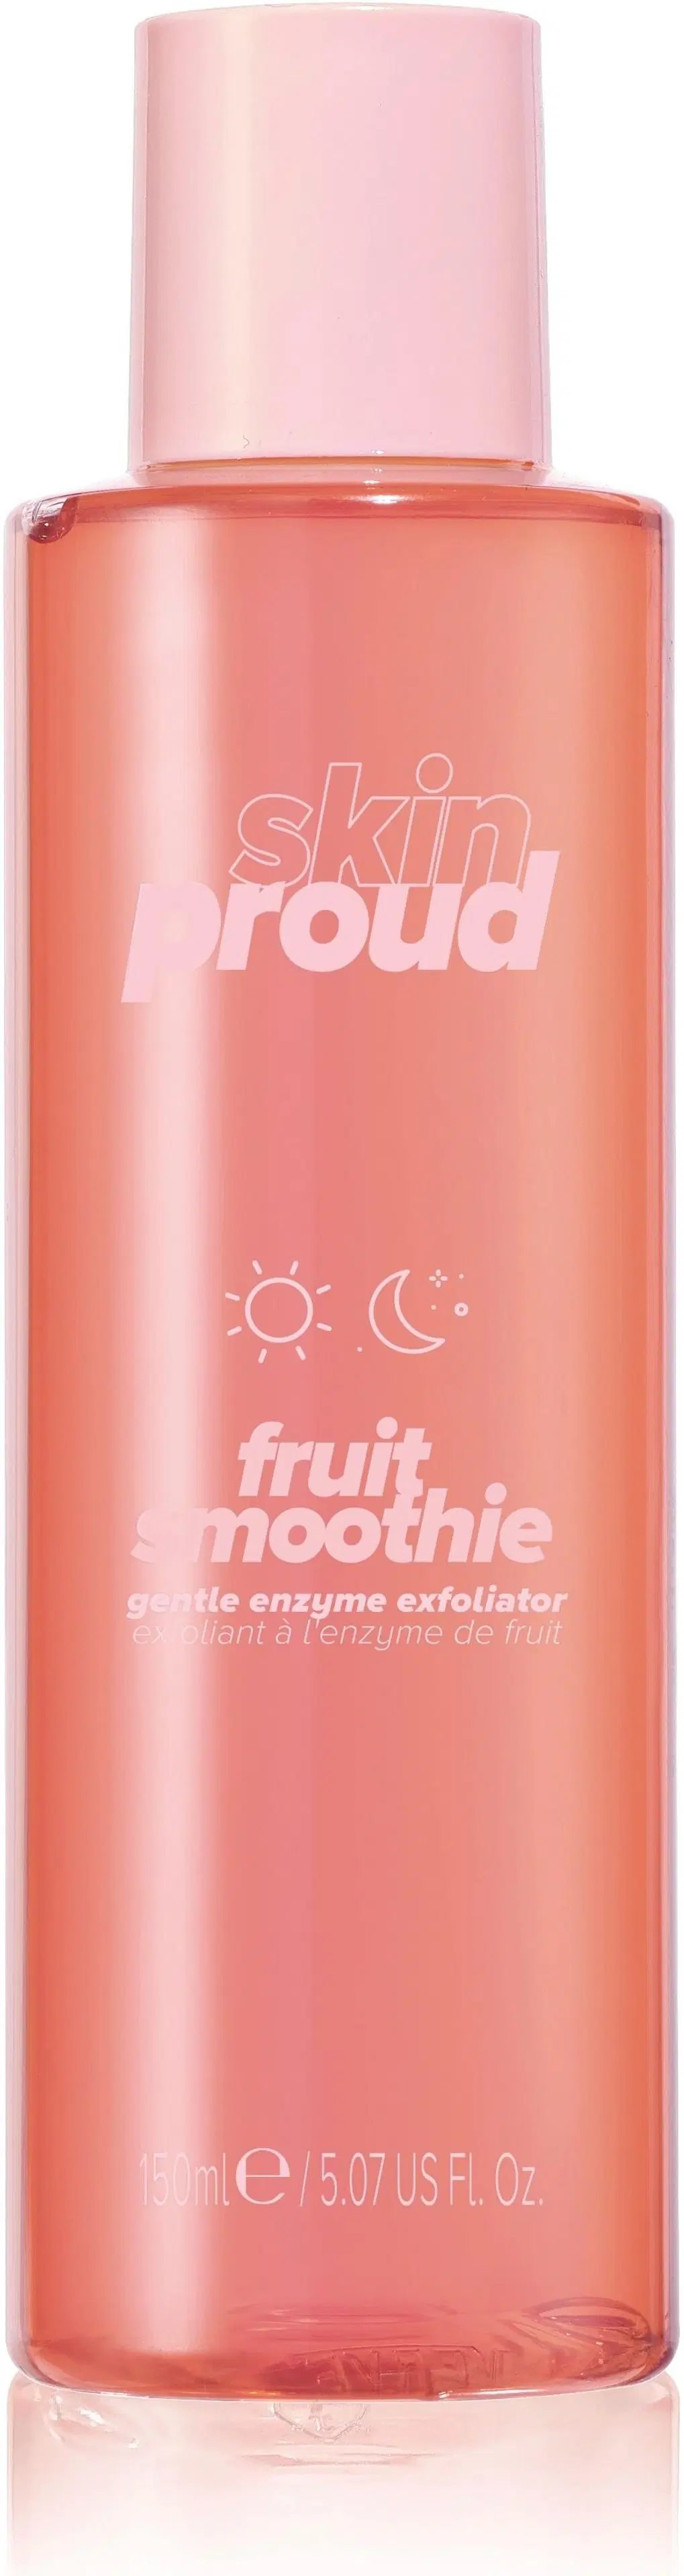 Skin Proud Fruit Smoothie Fruit Enzyme Exfoliator -kuoriva entsyymikasvovesi 150ml